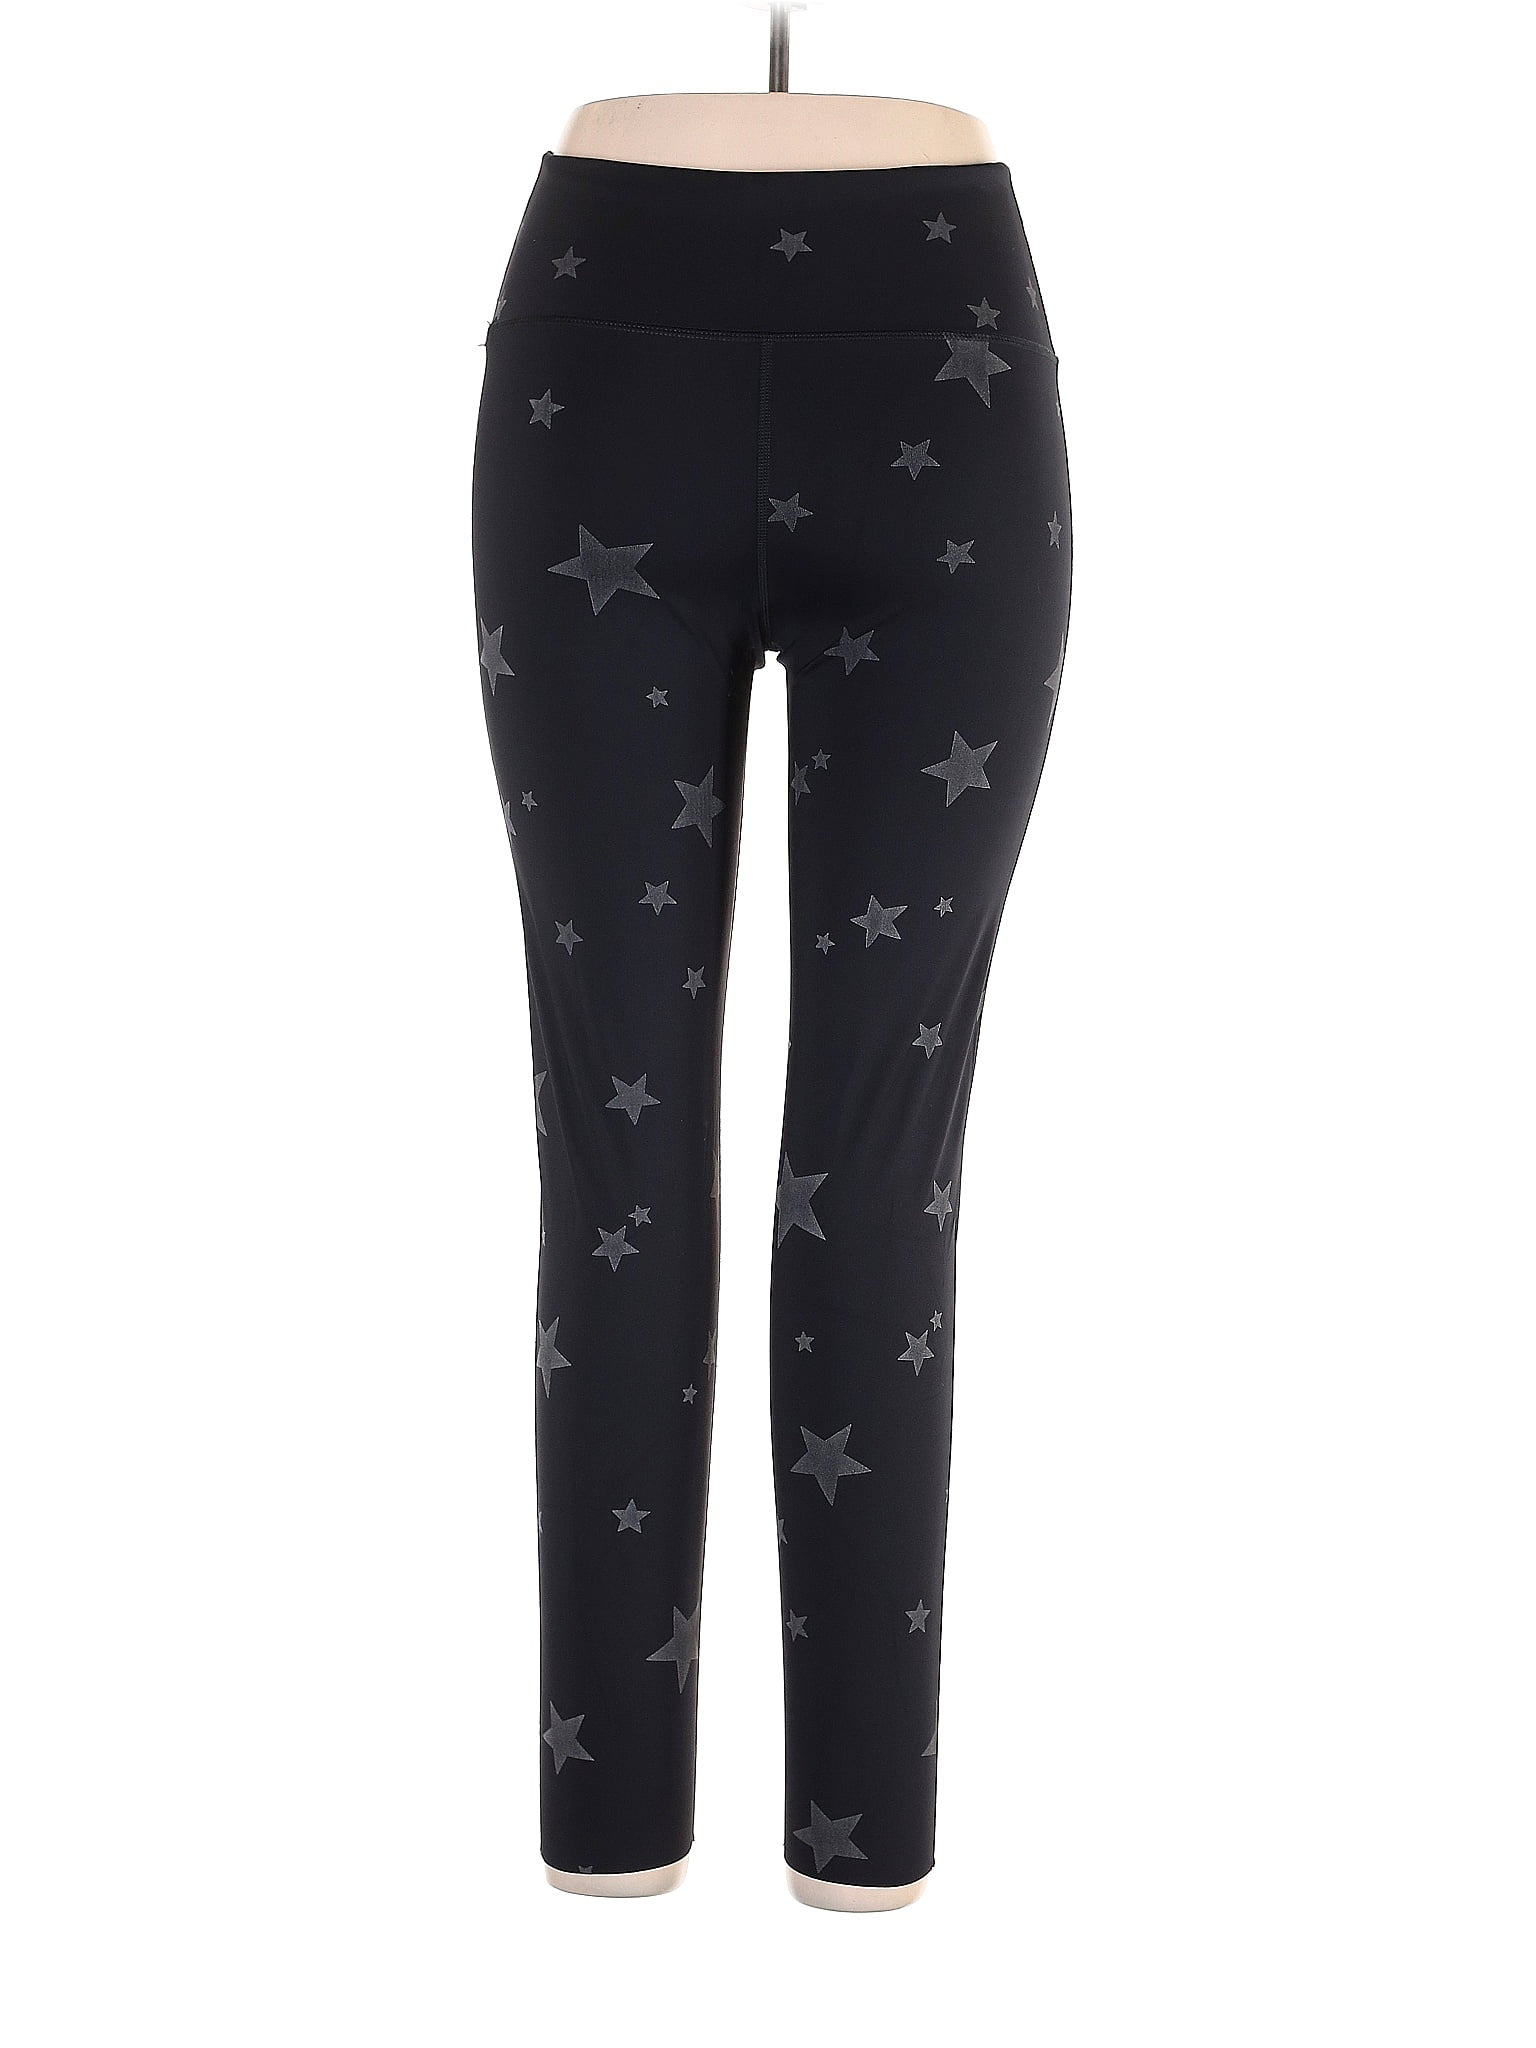 Aerie Stars Black Active Pants Size XL - 47% off